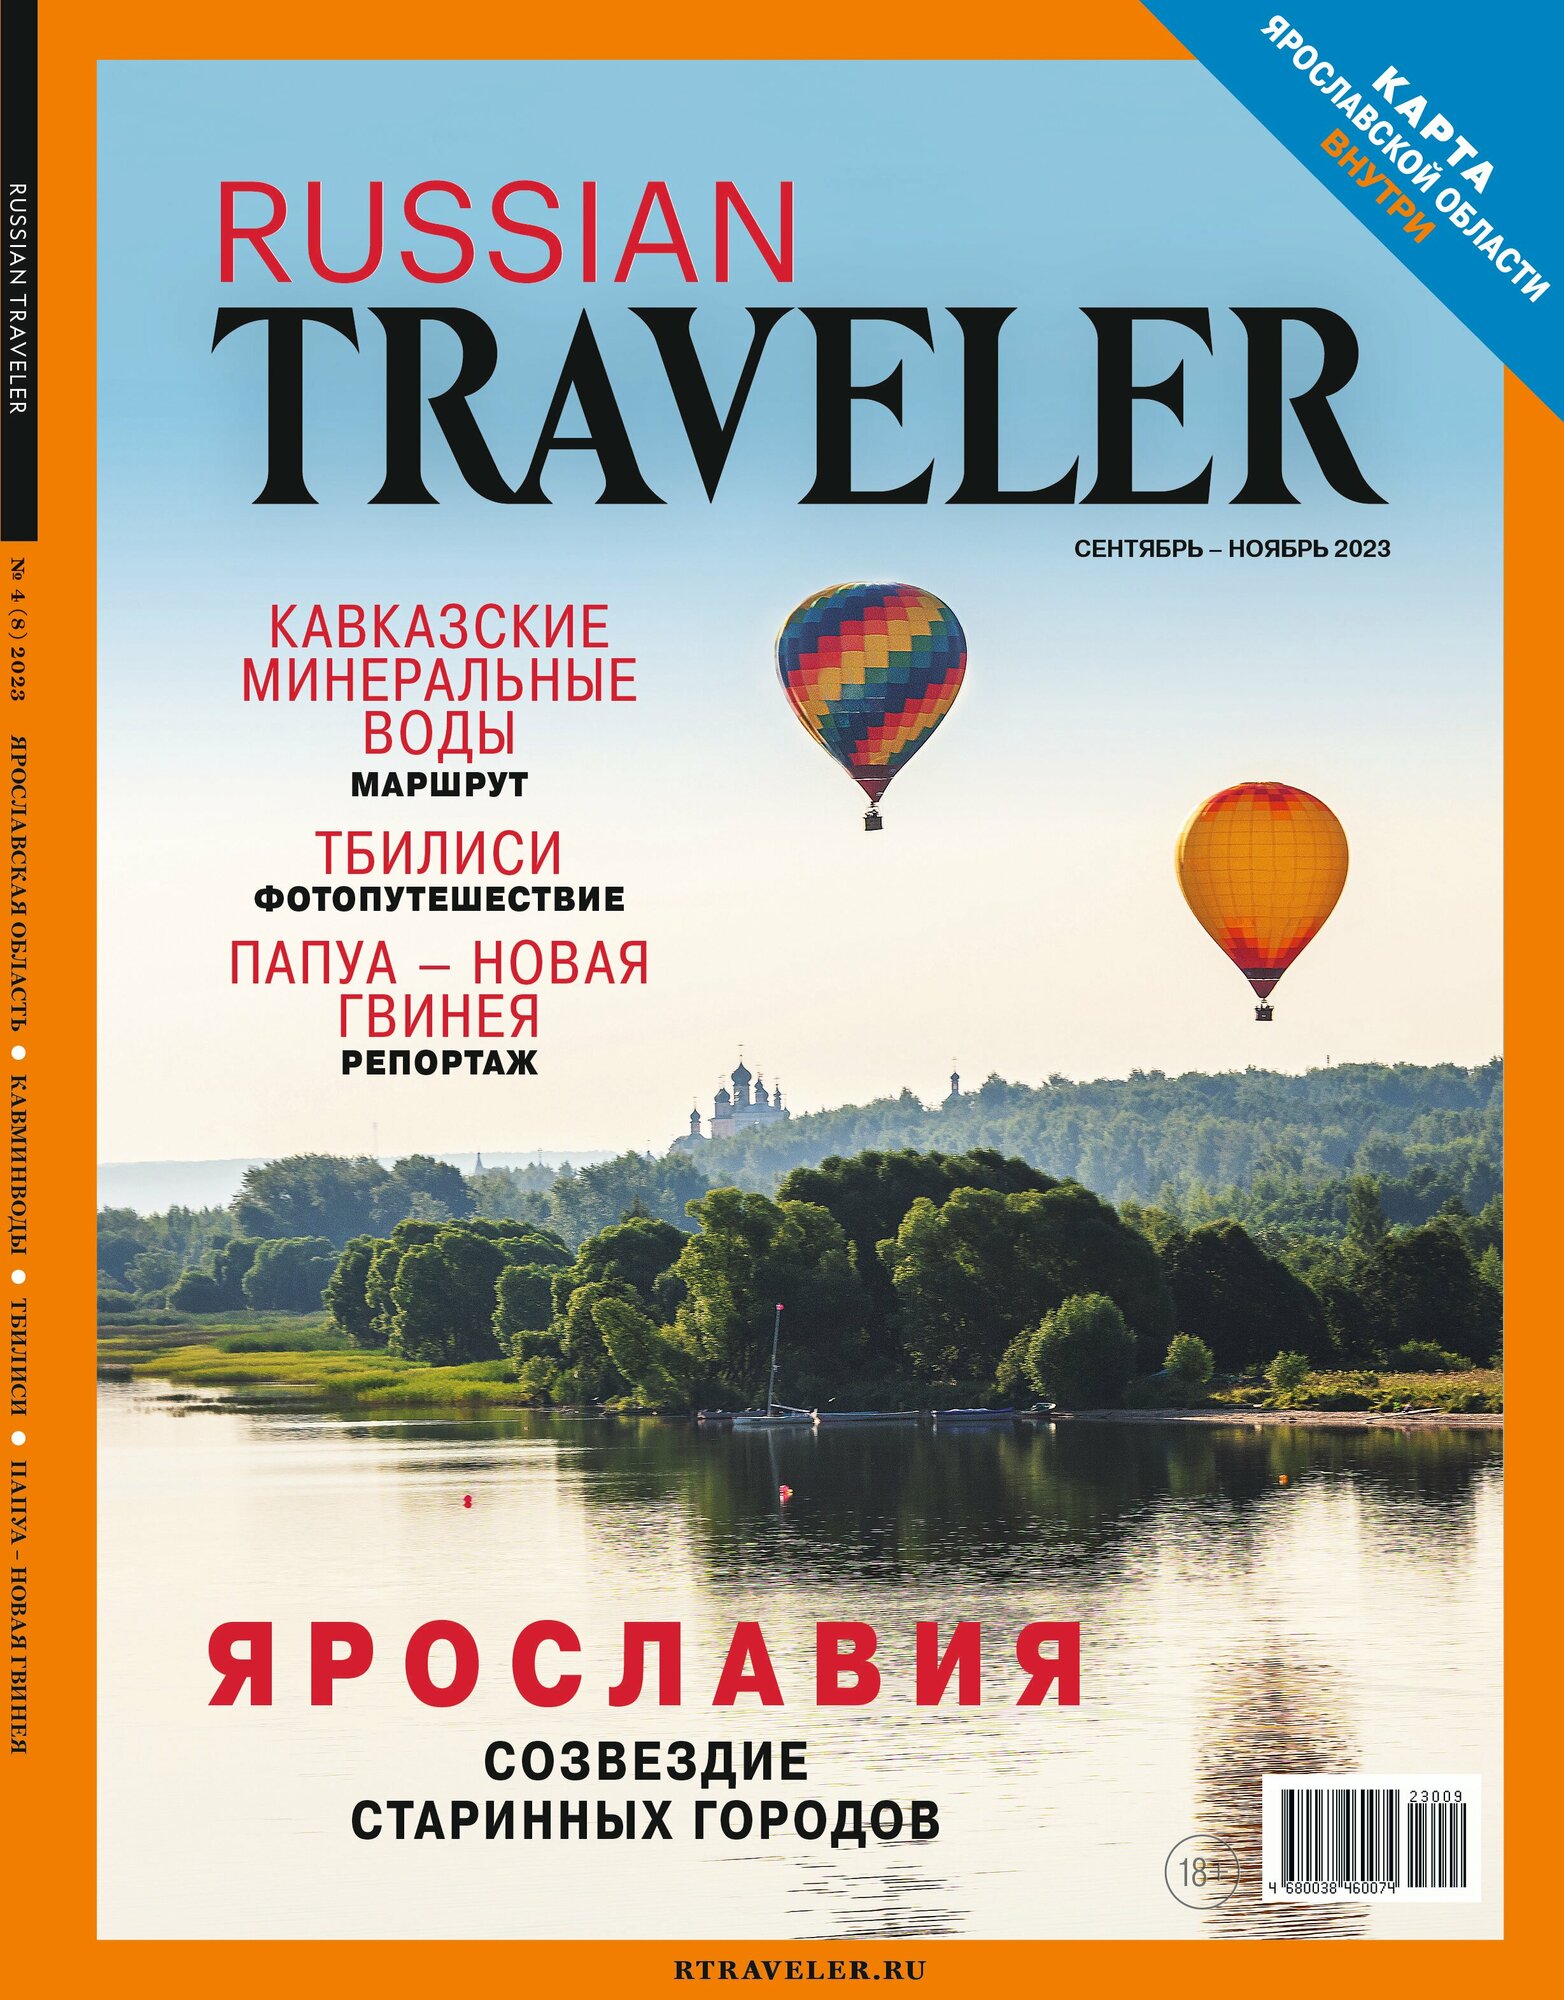 Журнал Russian Traveler № 4(8) Сентябрь-Ноябрь 2023